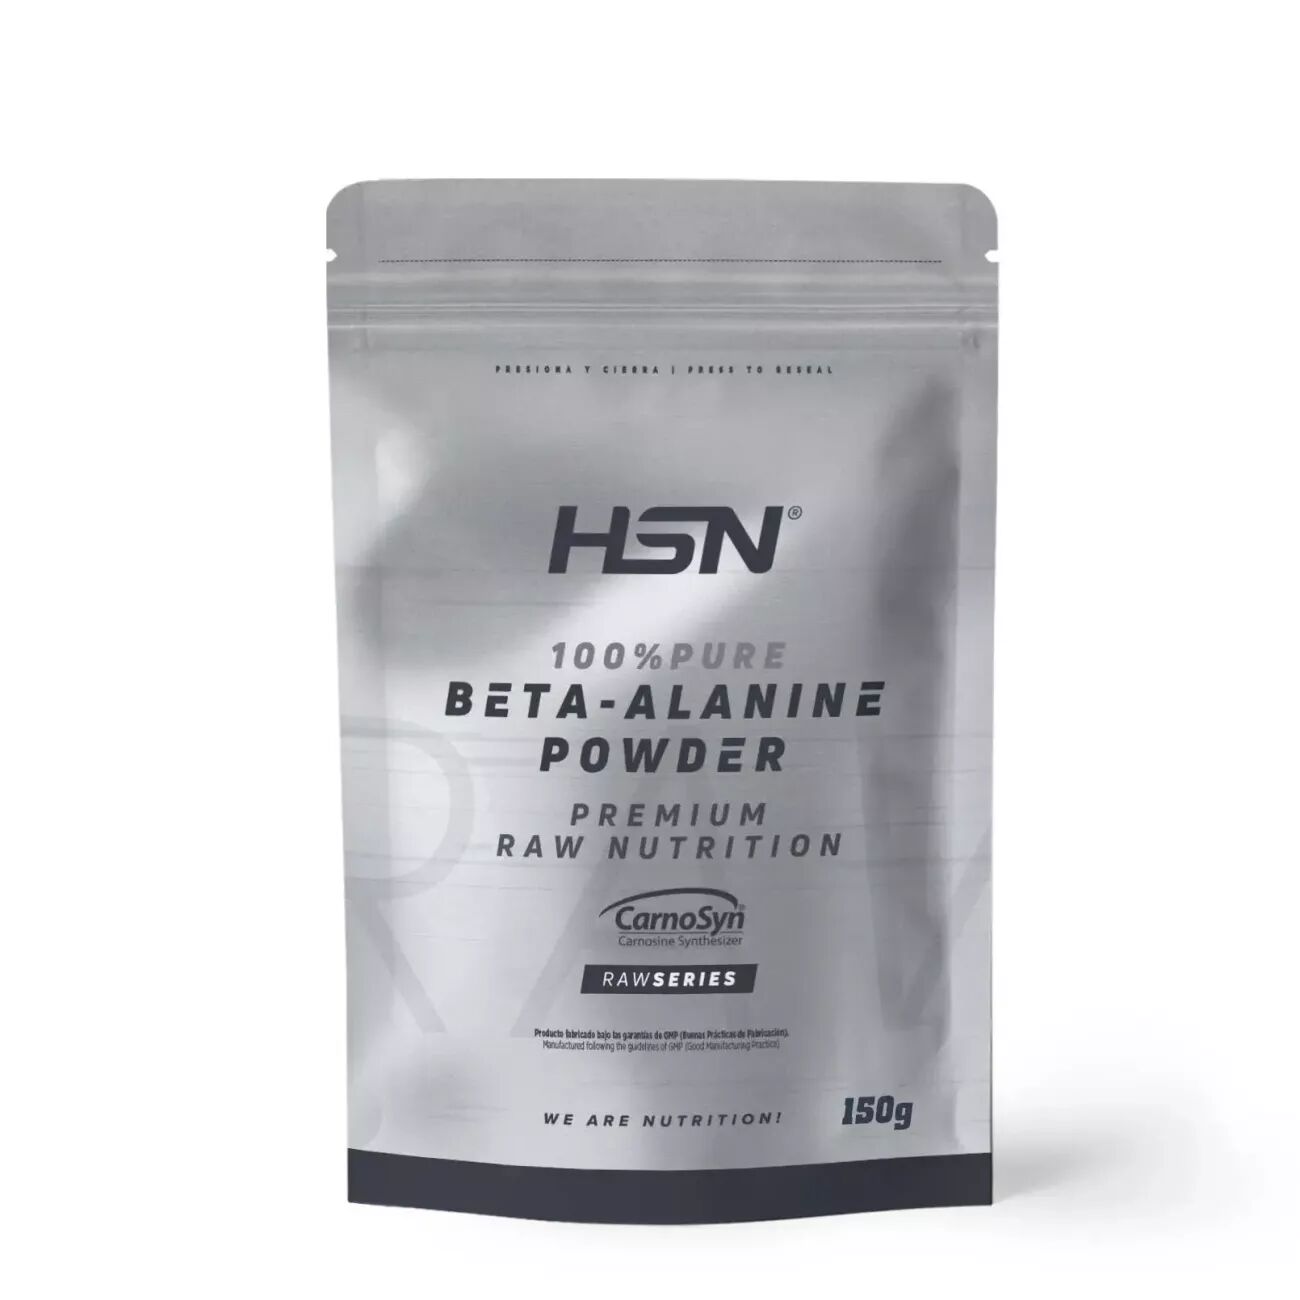 HSN 100% pura beta-alanina (carnosyn®) en polvo 150g